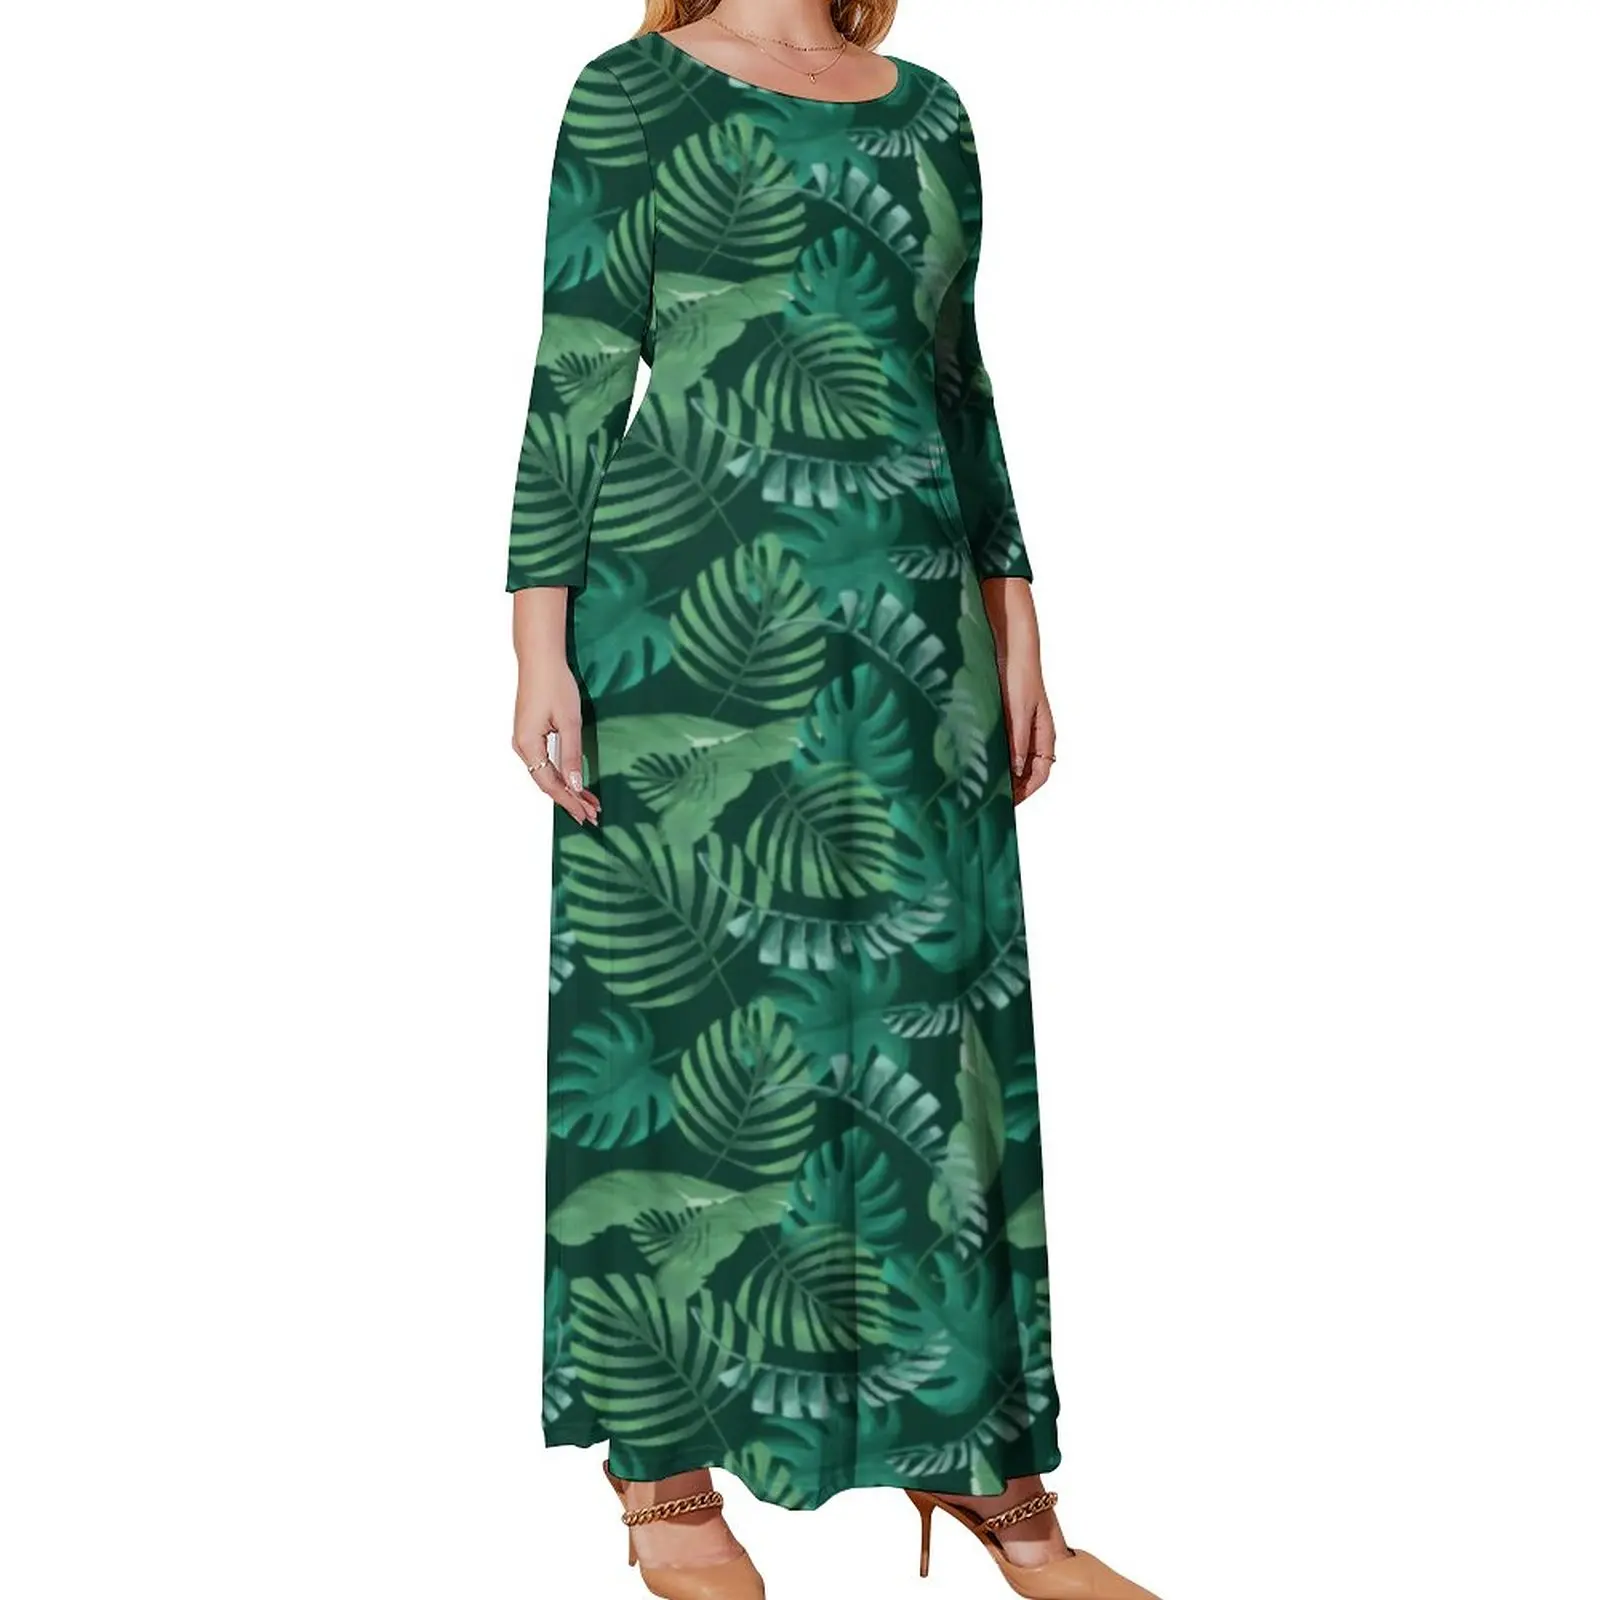 Tropical Leaf Print Dress Plus Size Palm Leaves Graphic Maxi Dress Long-Sleeve Street Wear Bohemia Long Dresses Birthday Gift